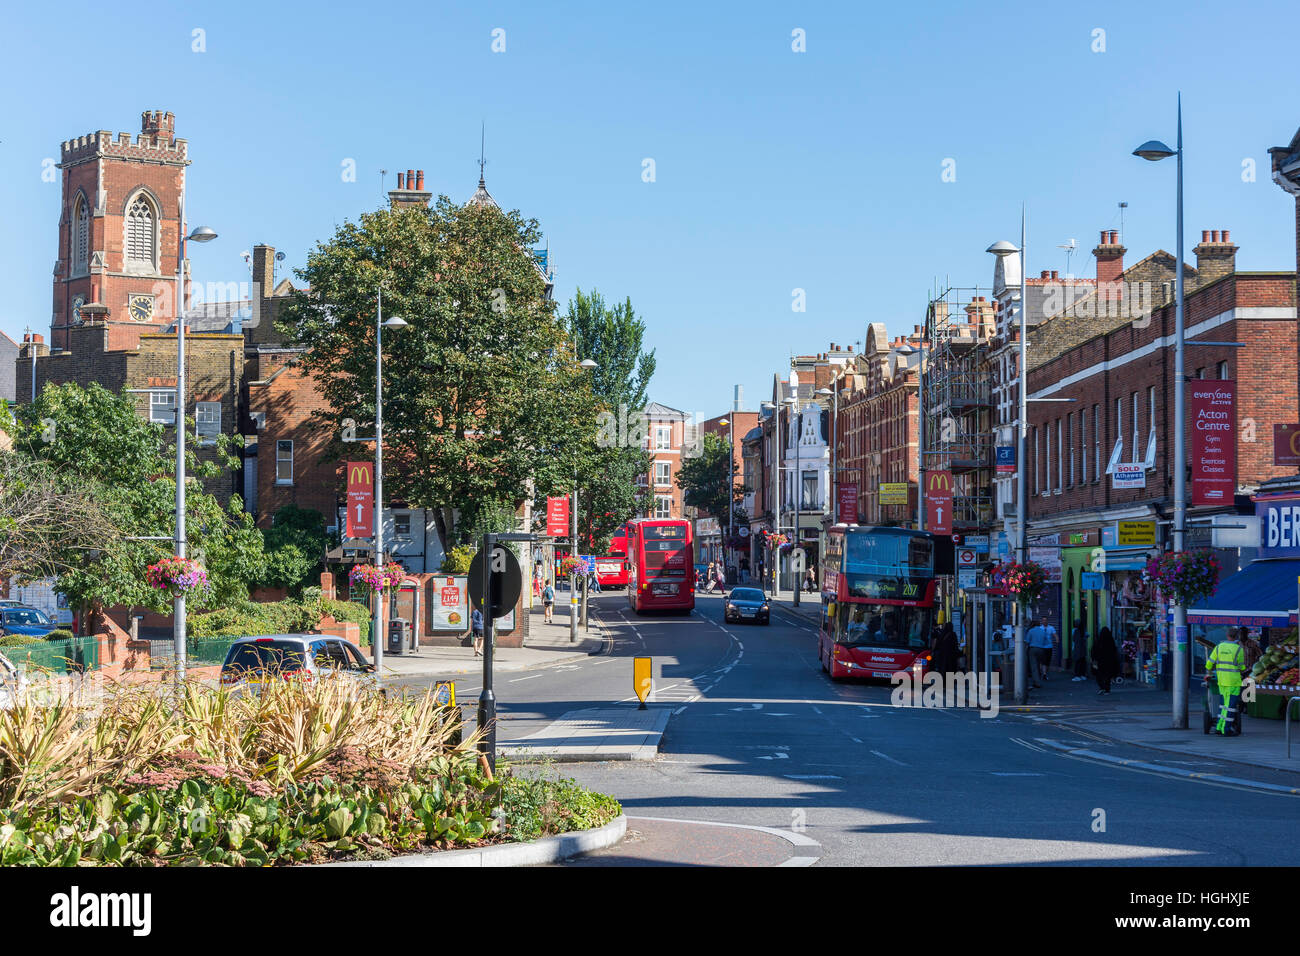 Acton High Street, Acton, London Borough of Ealing, Greater London, England, United Kingdom Stock Photo